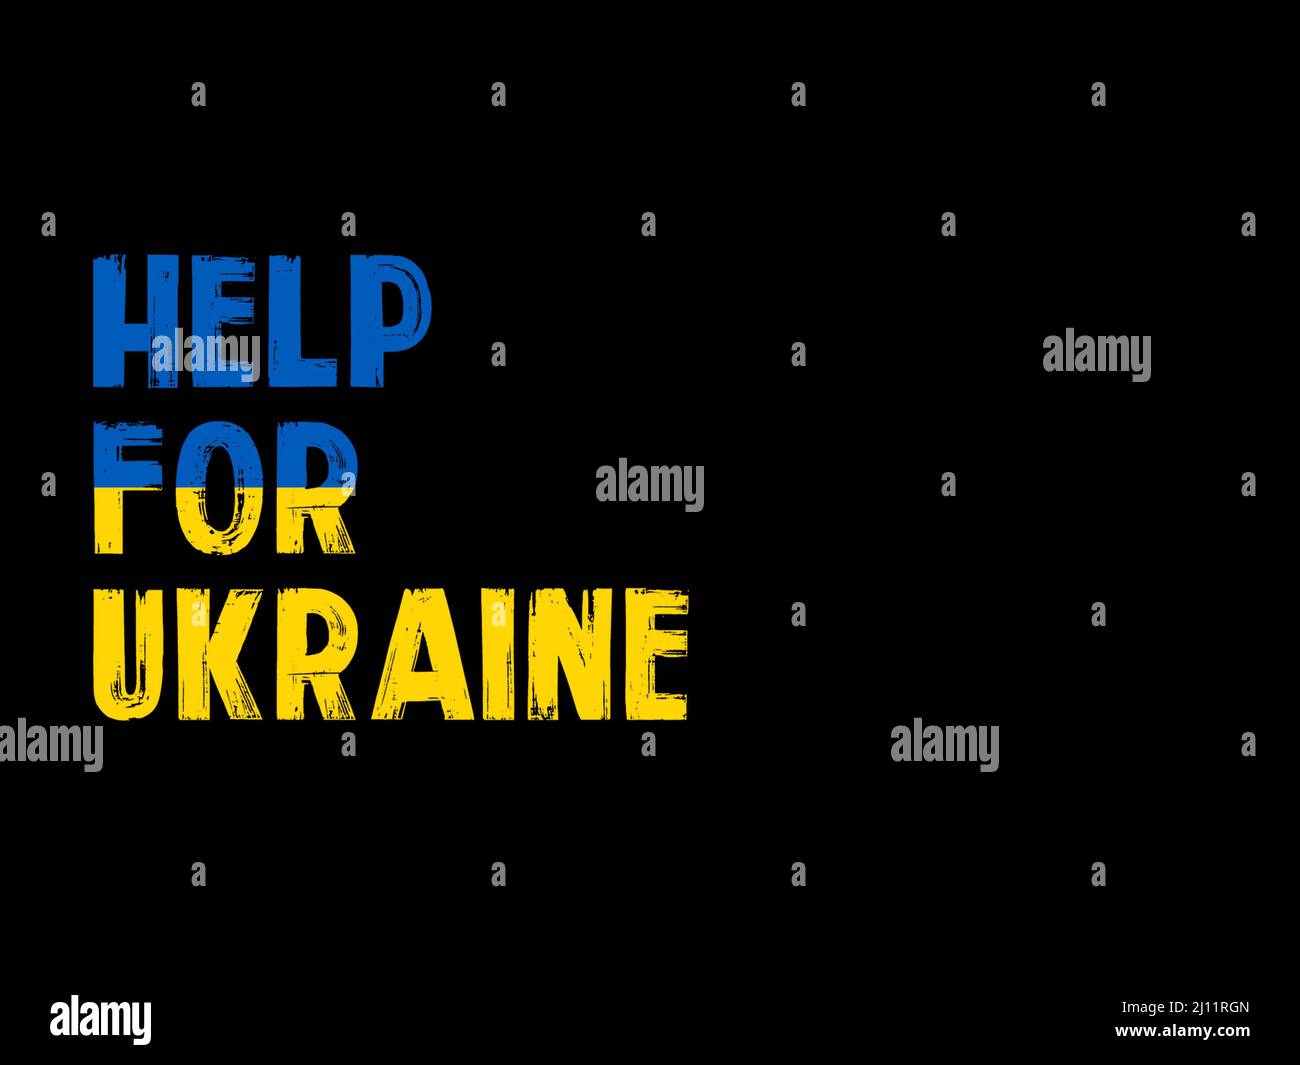 help for Ukraine Concept - stock illustration Stock Photo